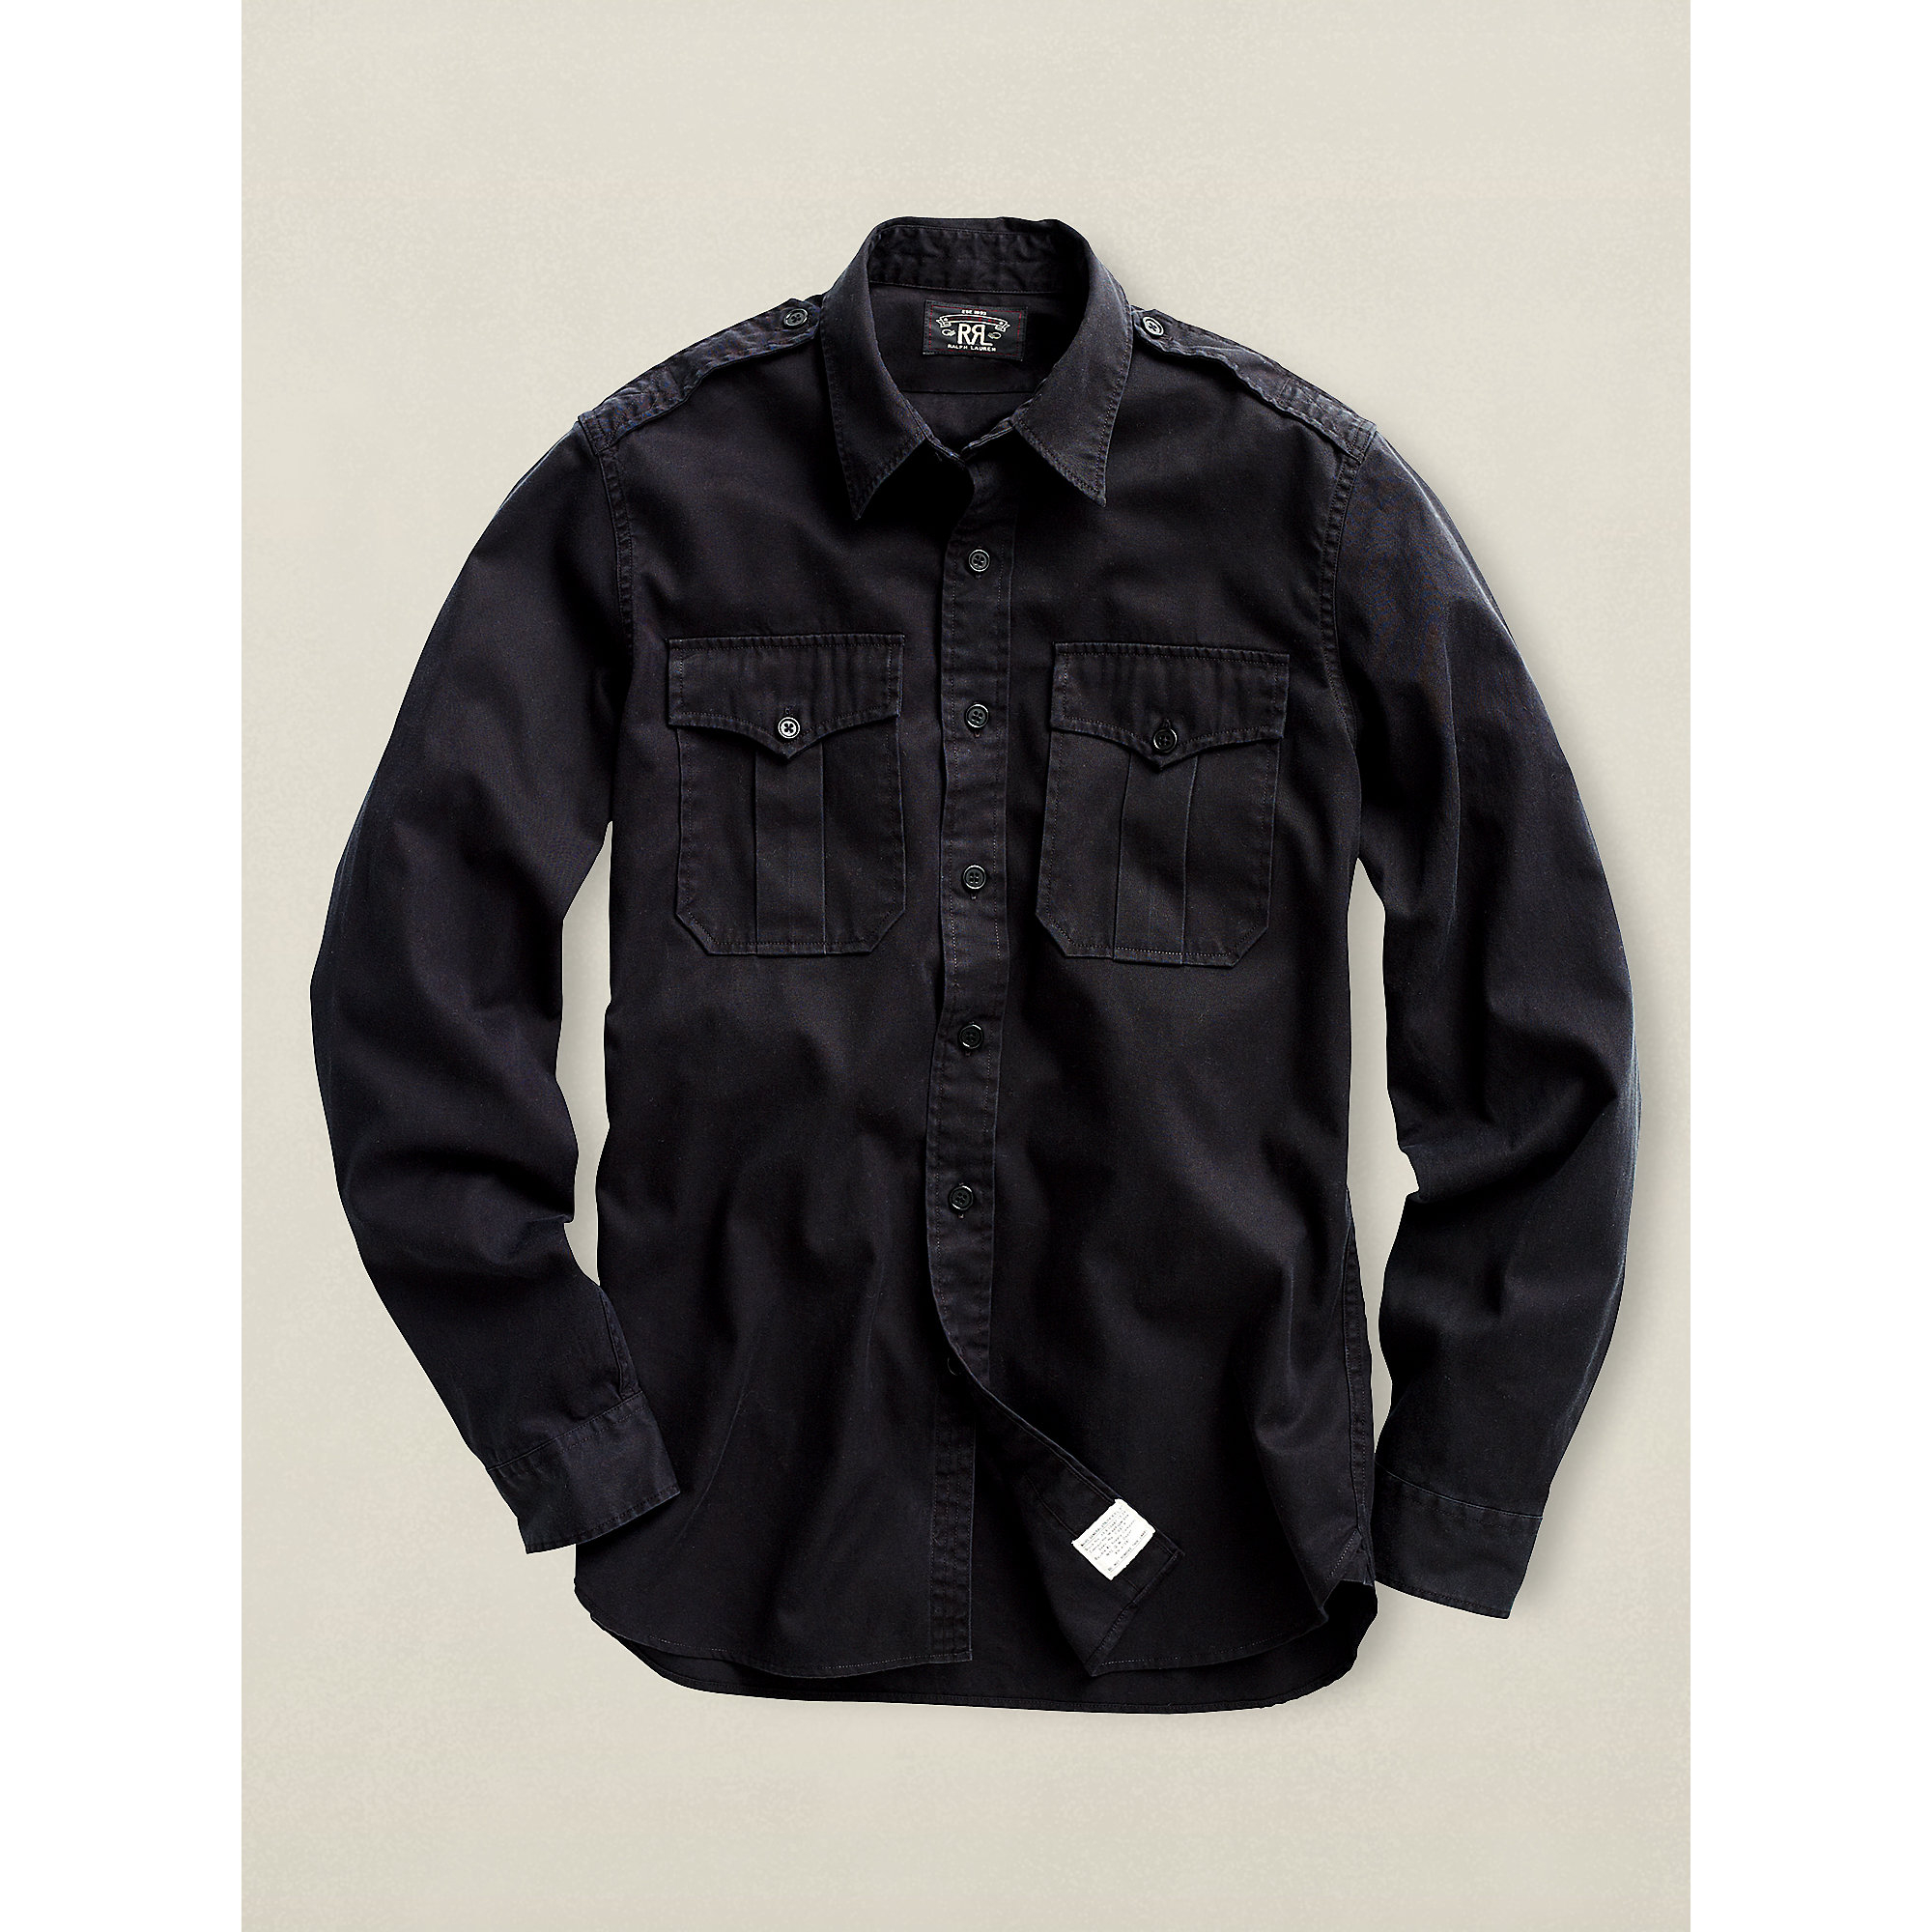 RRL Twill G.I. Utility Shirt in Black for Men - Lyst